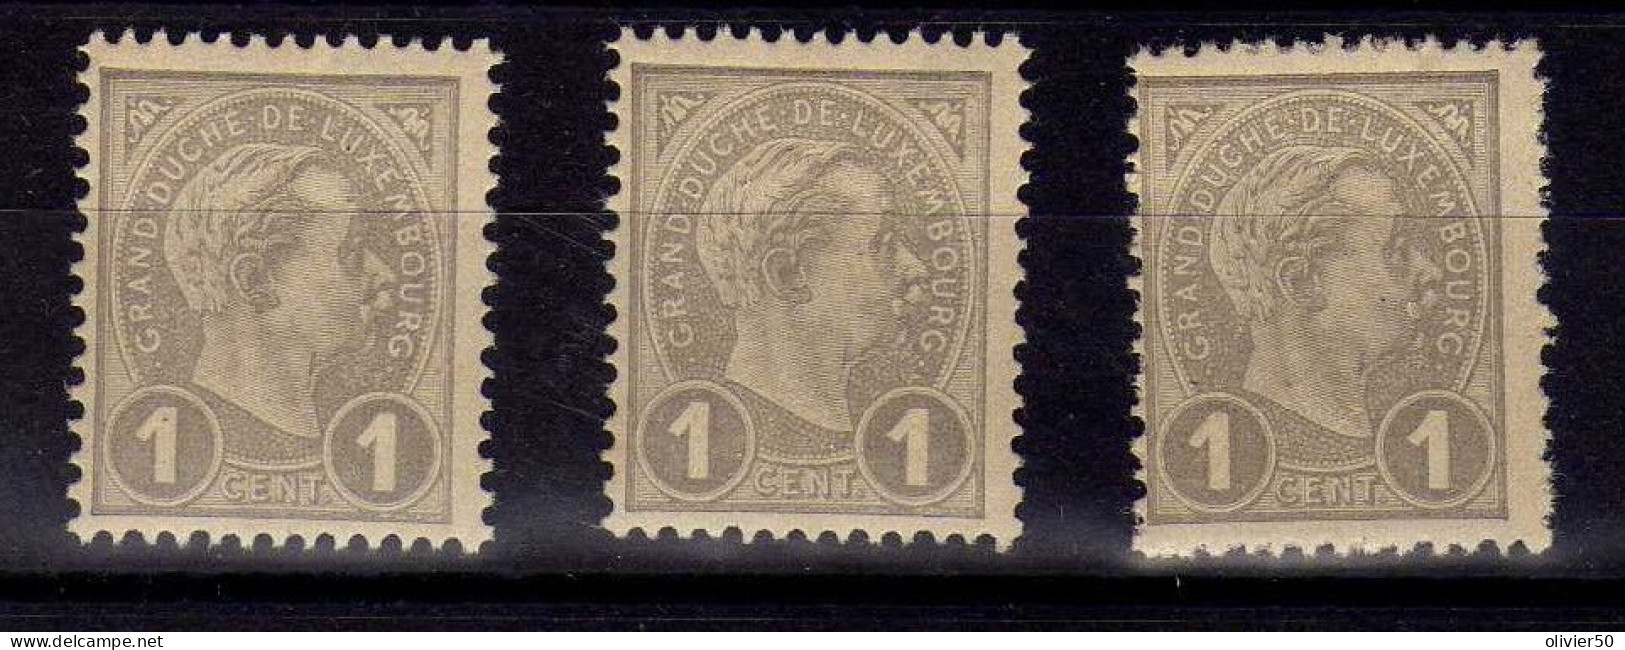 Luxembourg (1895) - 1 C. Grand-Duc Adolphe Neufs** - MNH - 1895 Adolphe De Profil